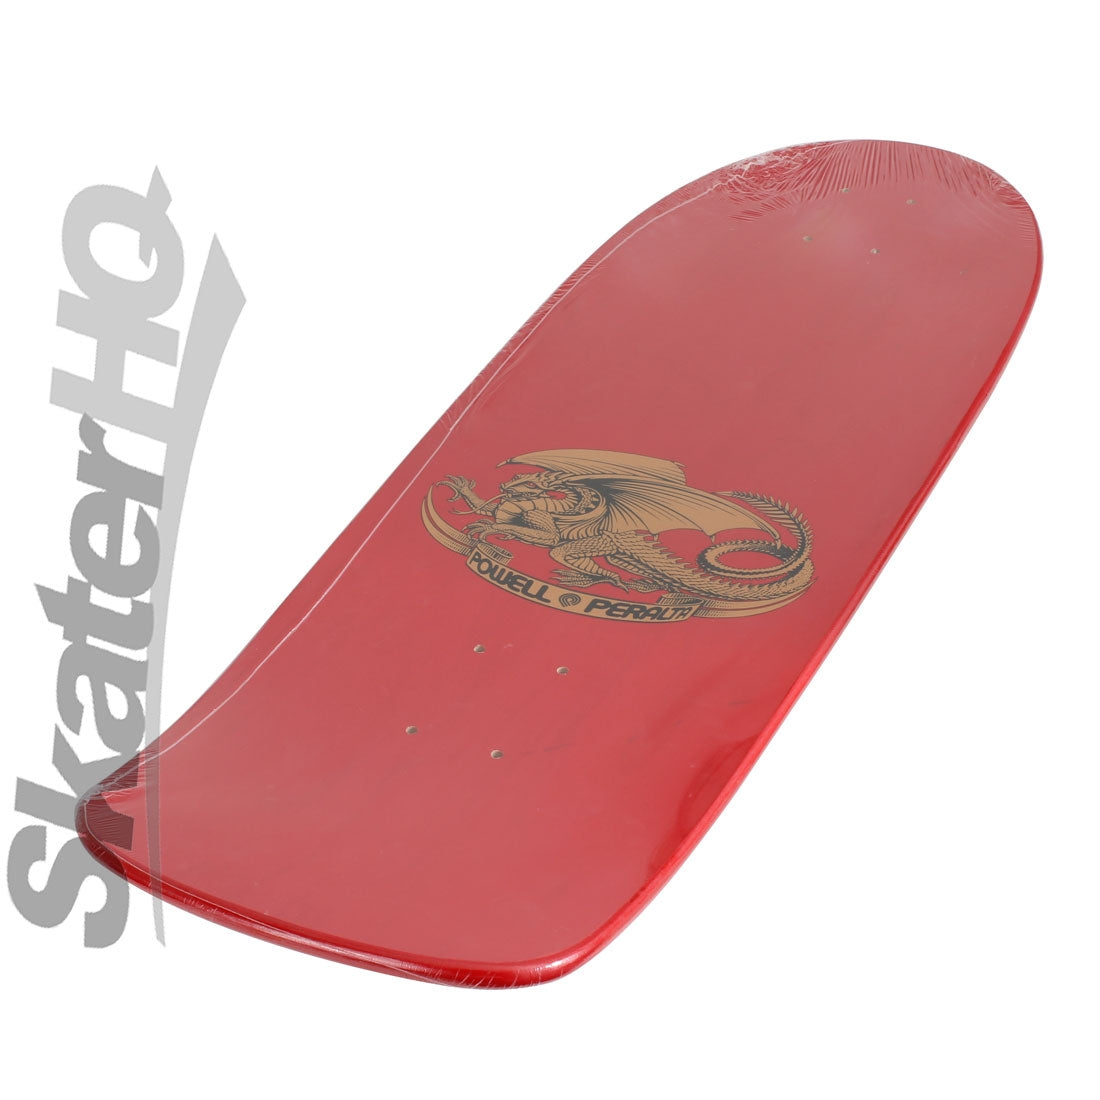 Powell Peralta Ripper OG 10.0 Deck Skateboard Decks Old School